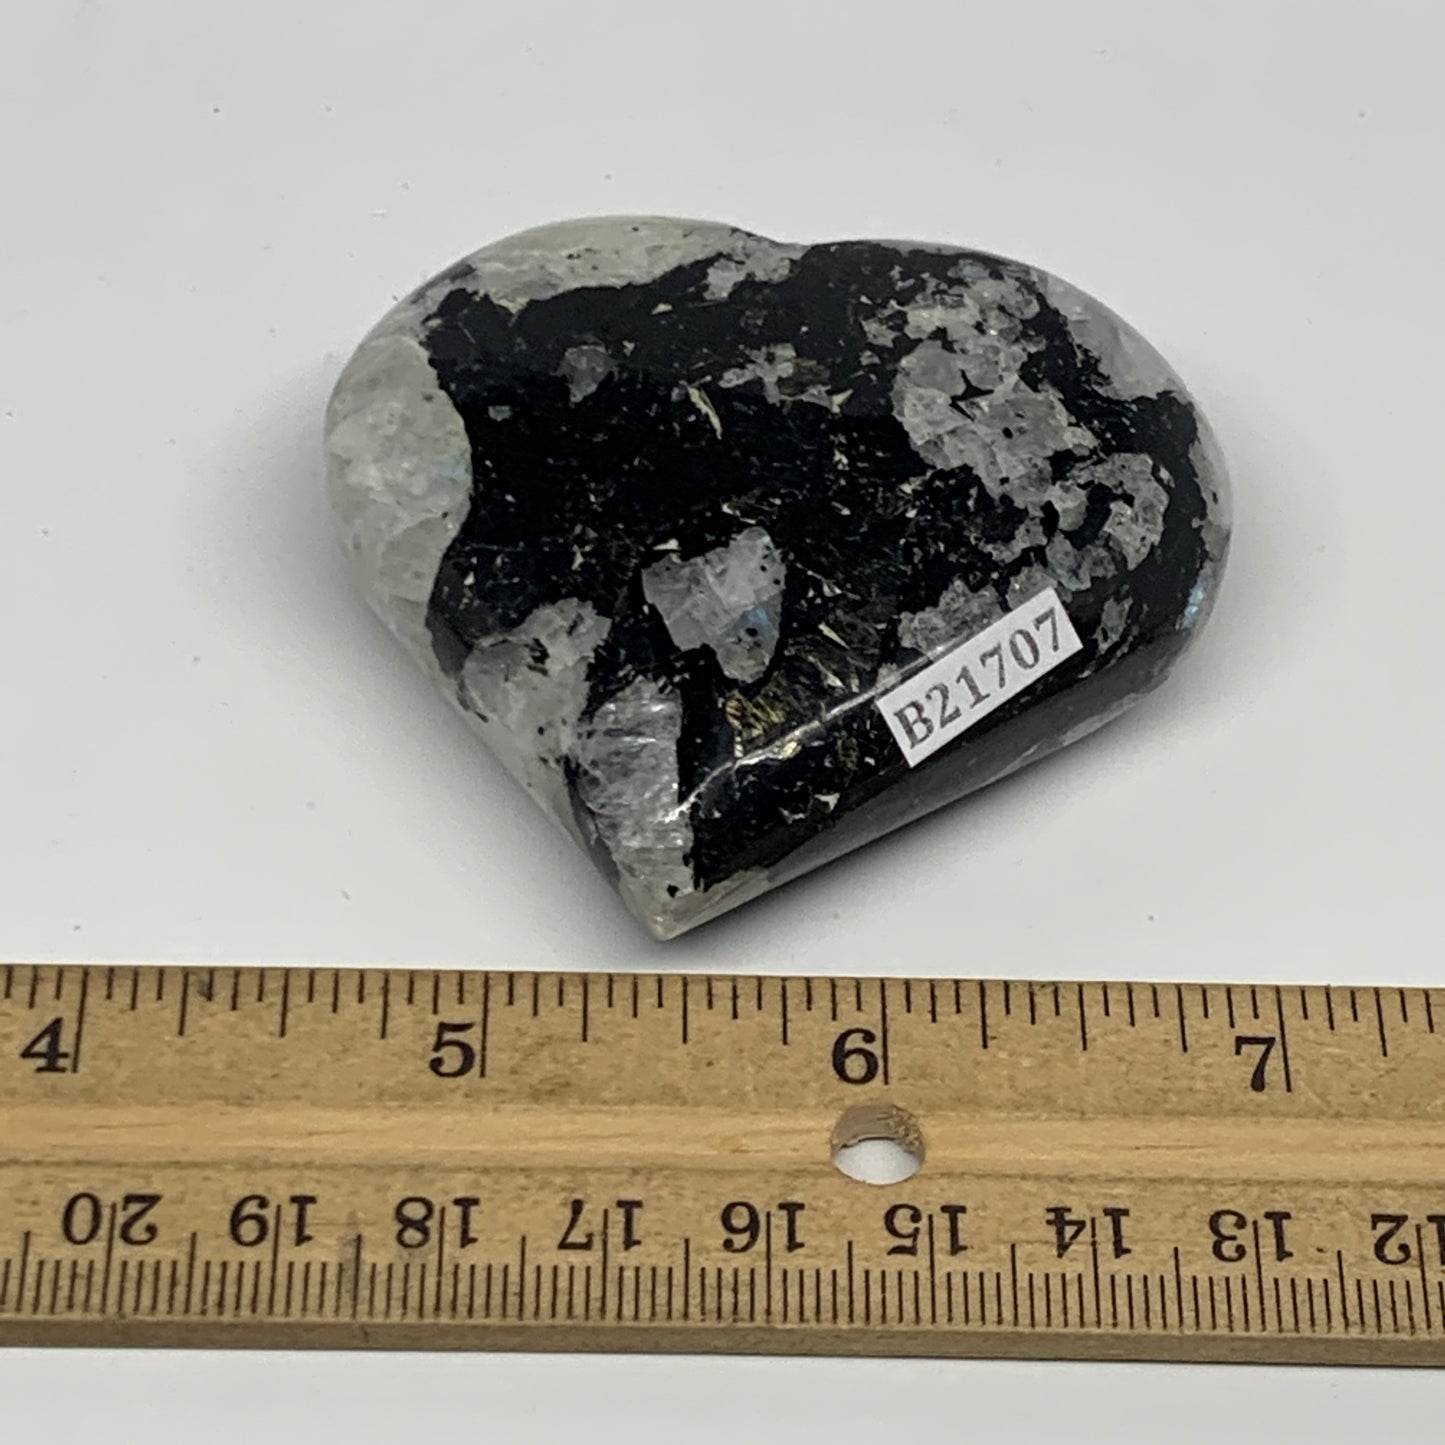 107.4g, 2.3"x2.5"x0.8", Rainbow Moonstone Heart Crystal Gemstone @India, B21707